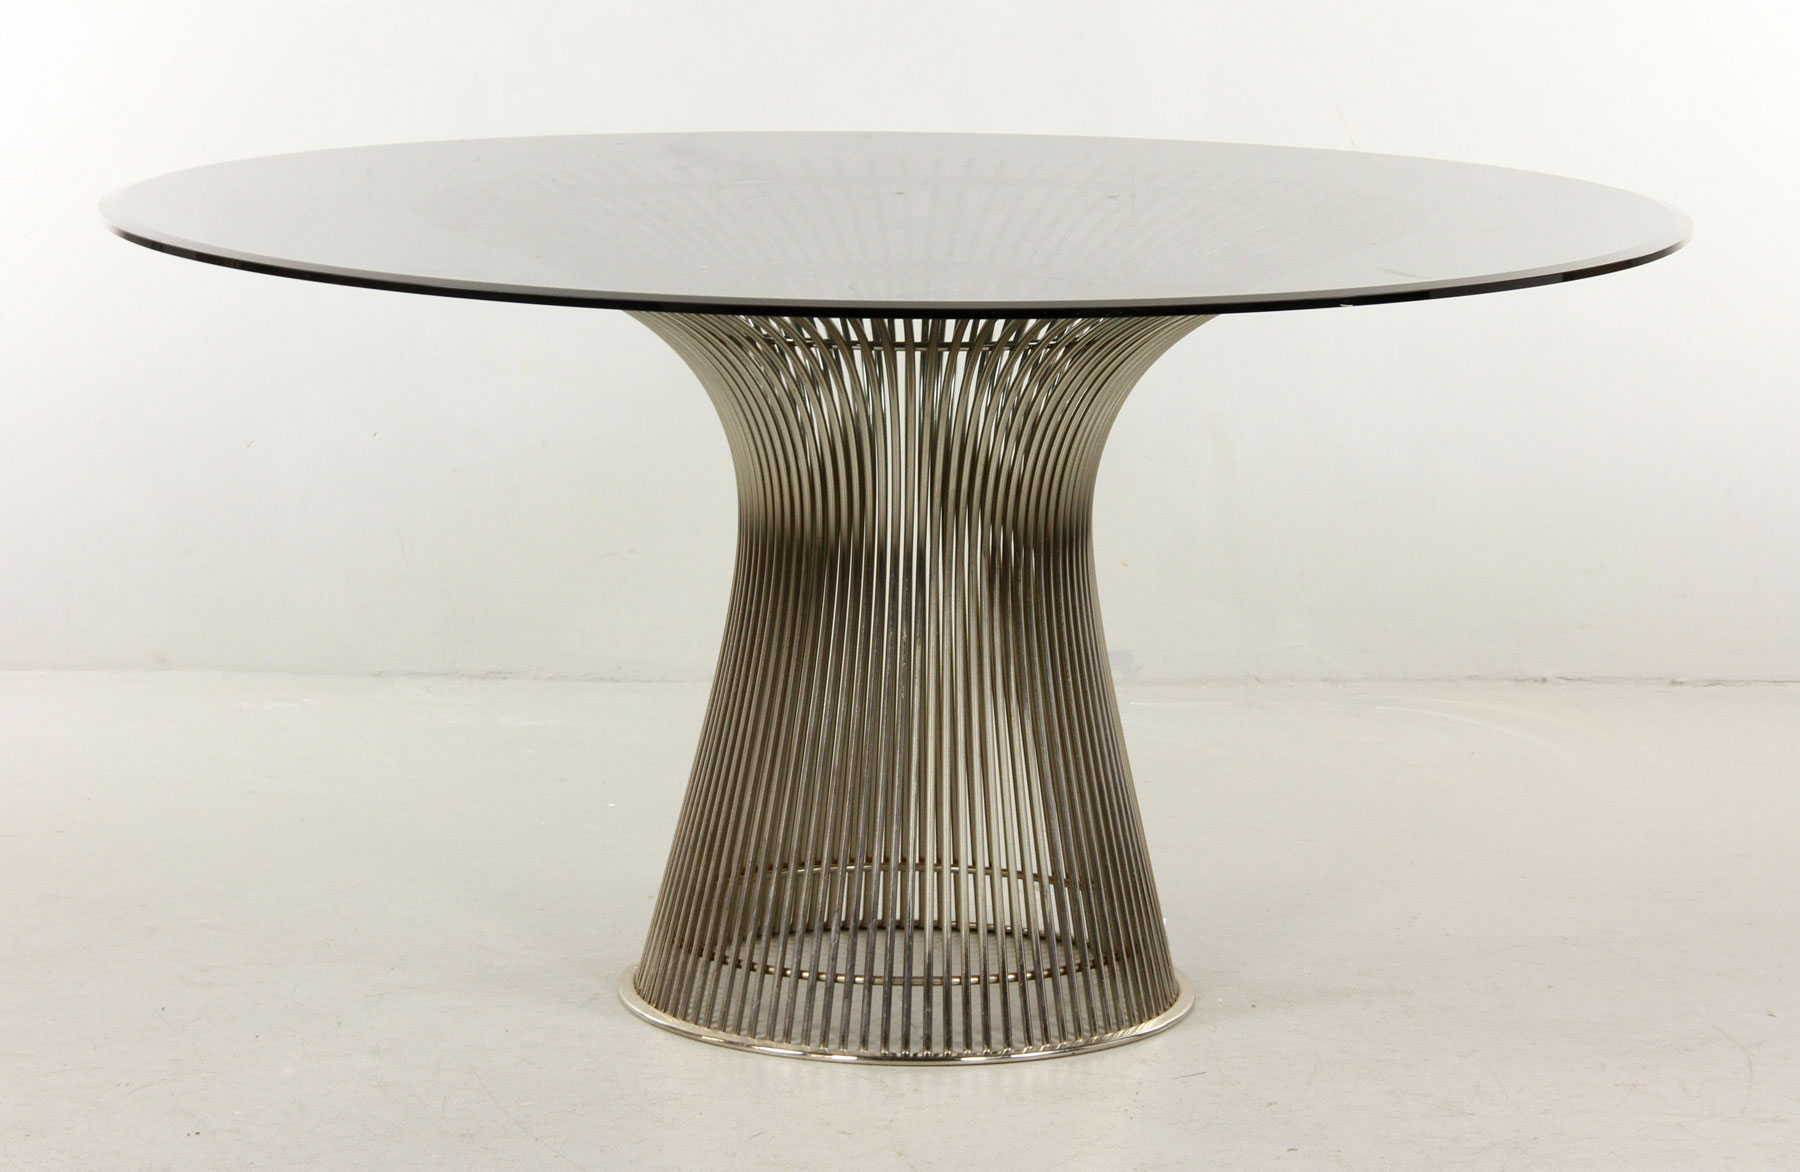 Warren Platner style table by N.K. Glas, made in Sweden